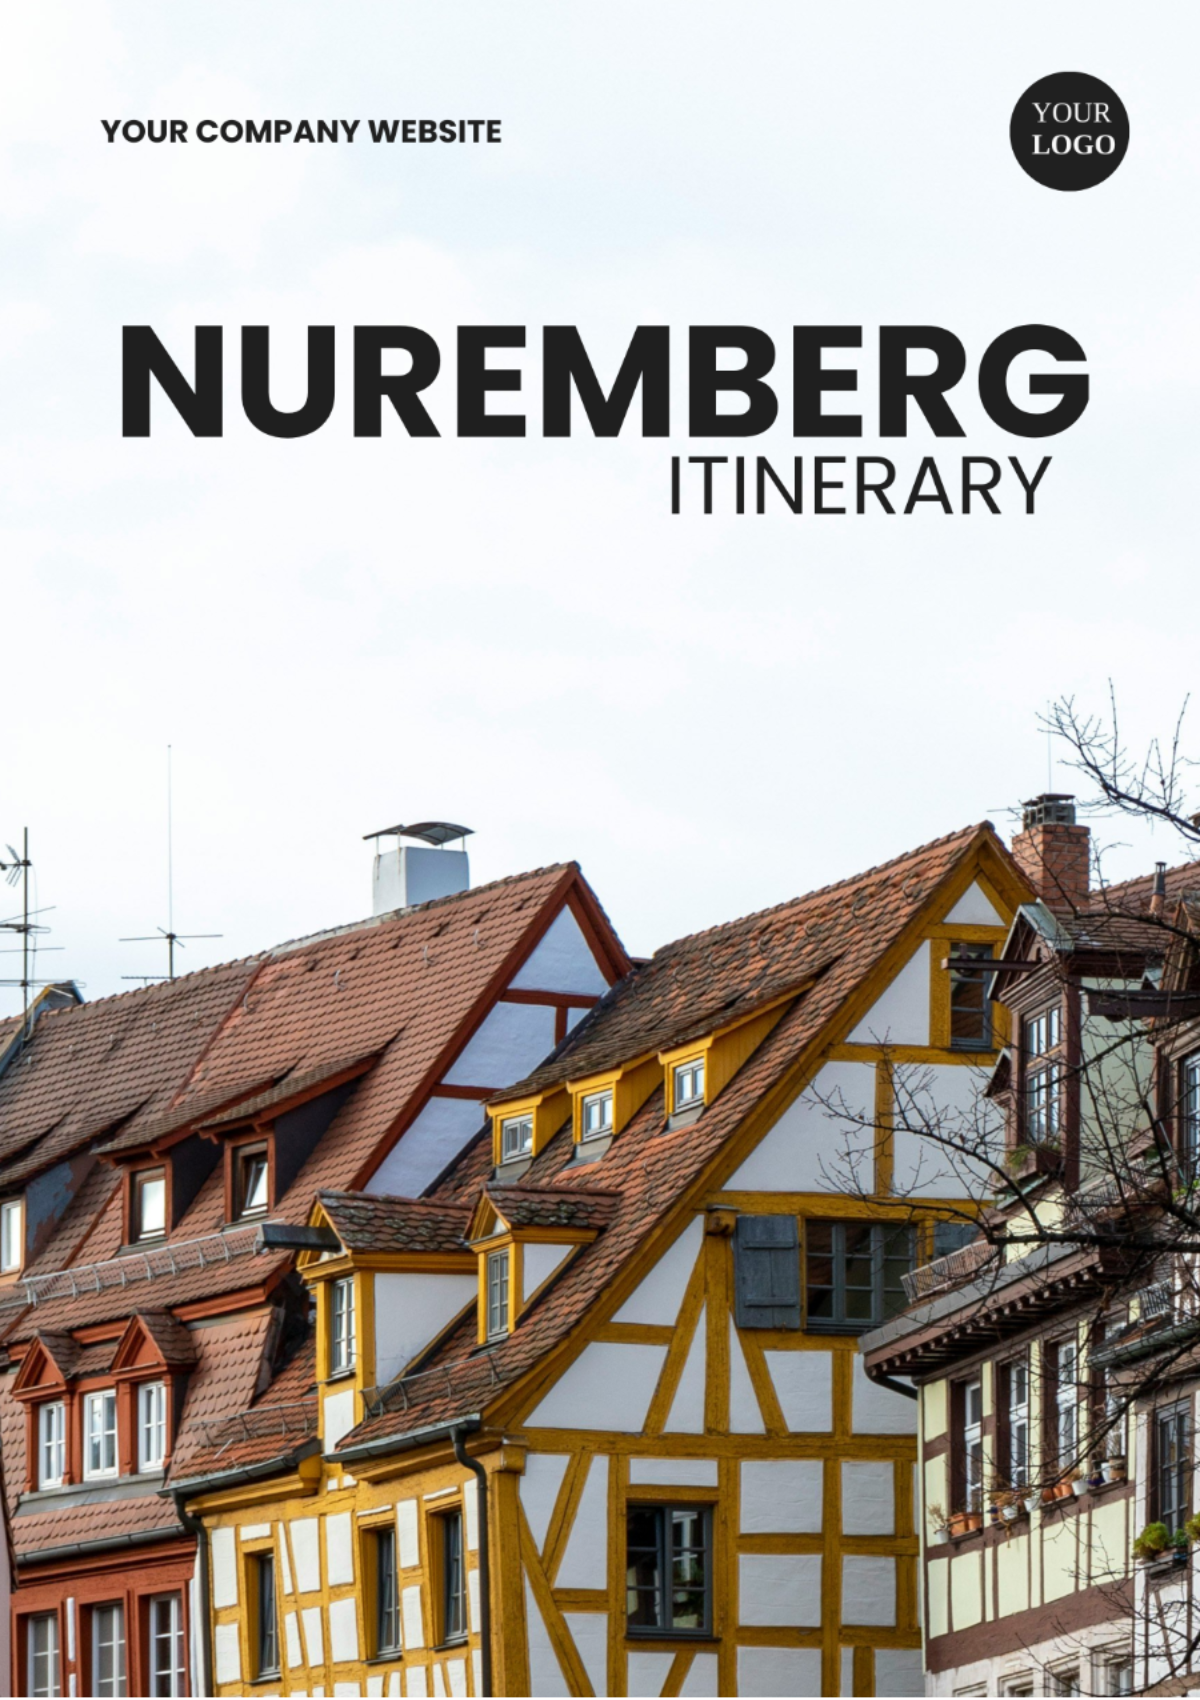 Free Nuremberg Itinerary Template